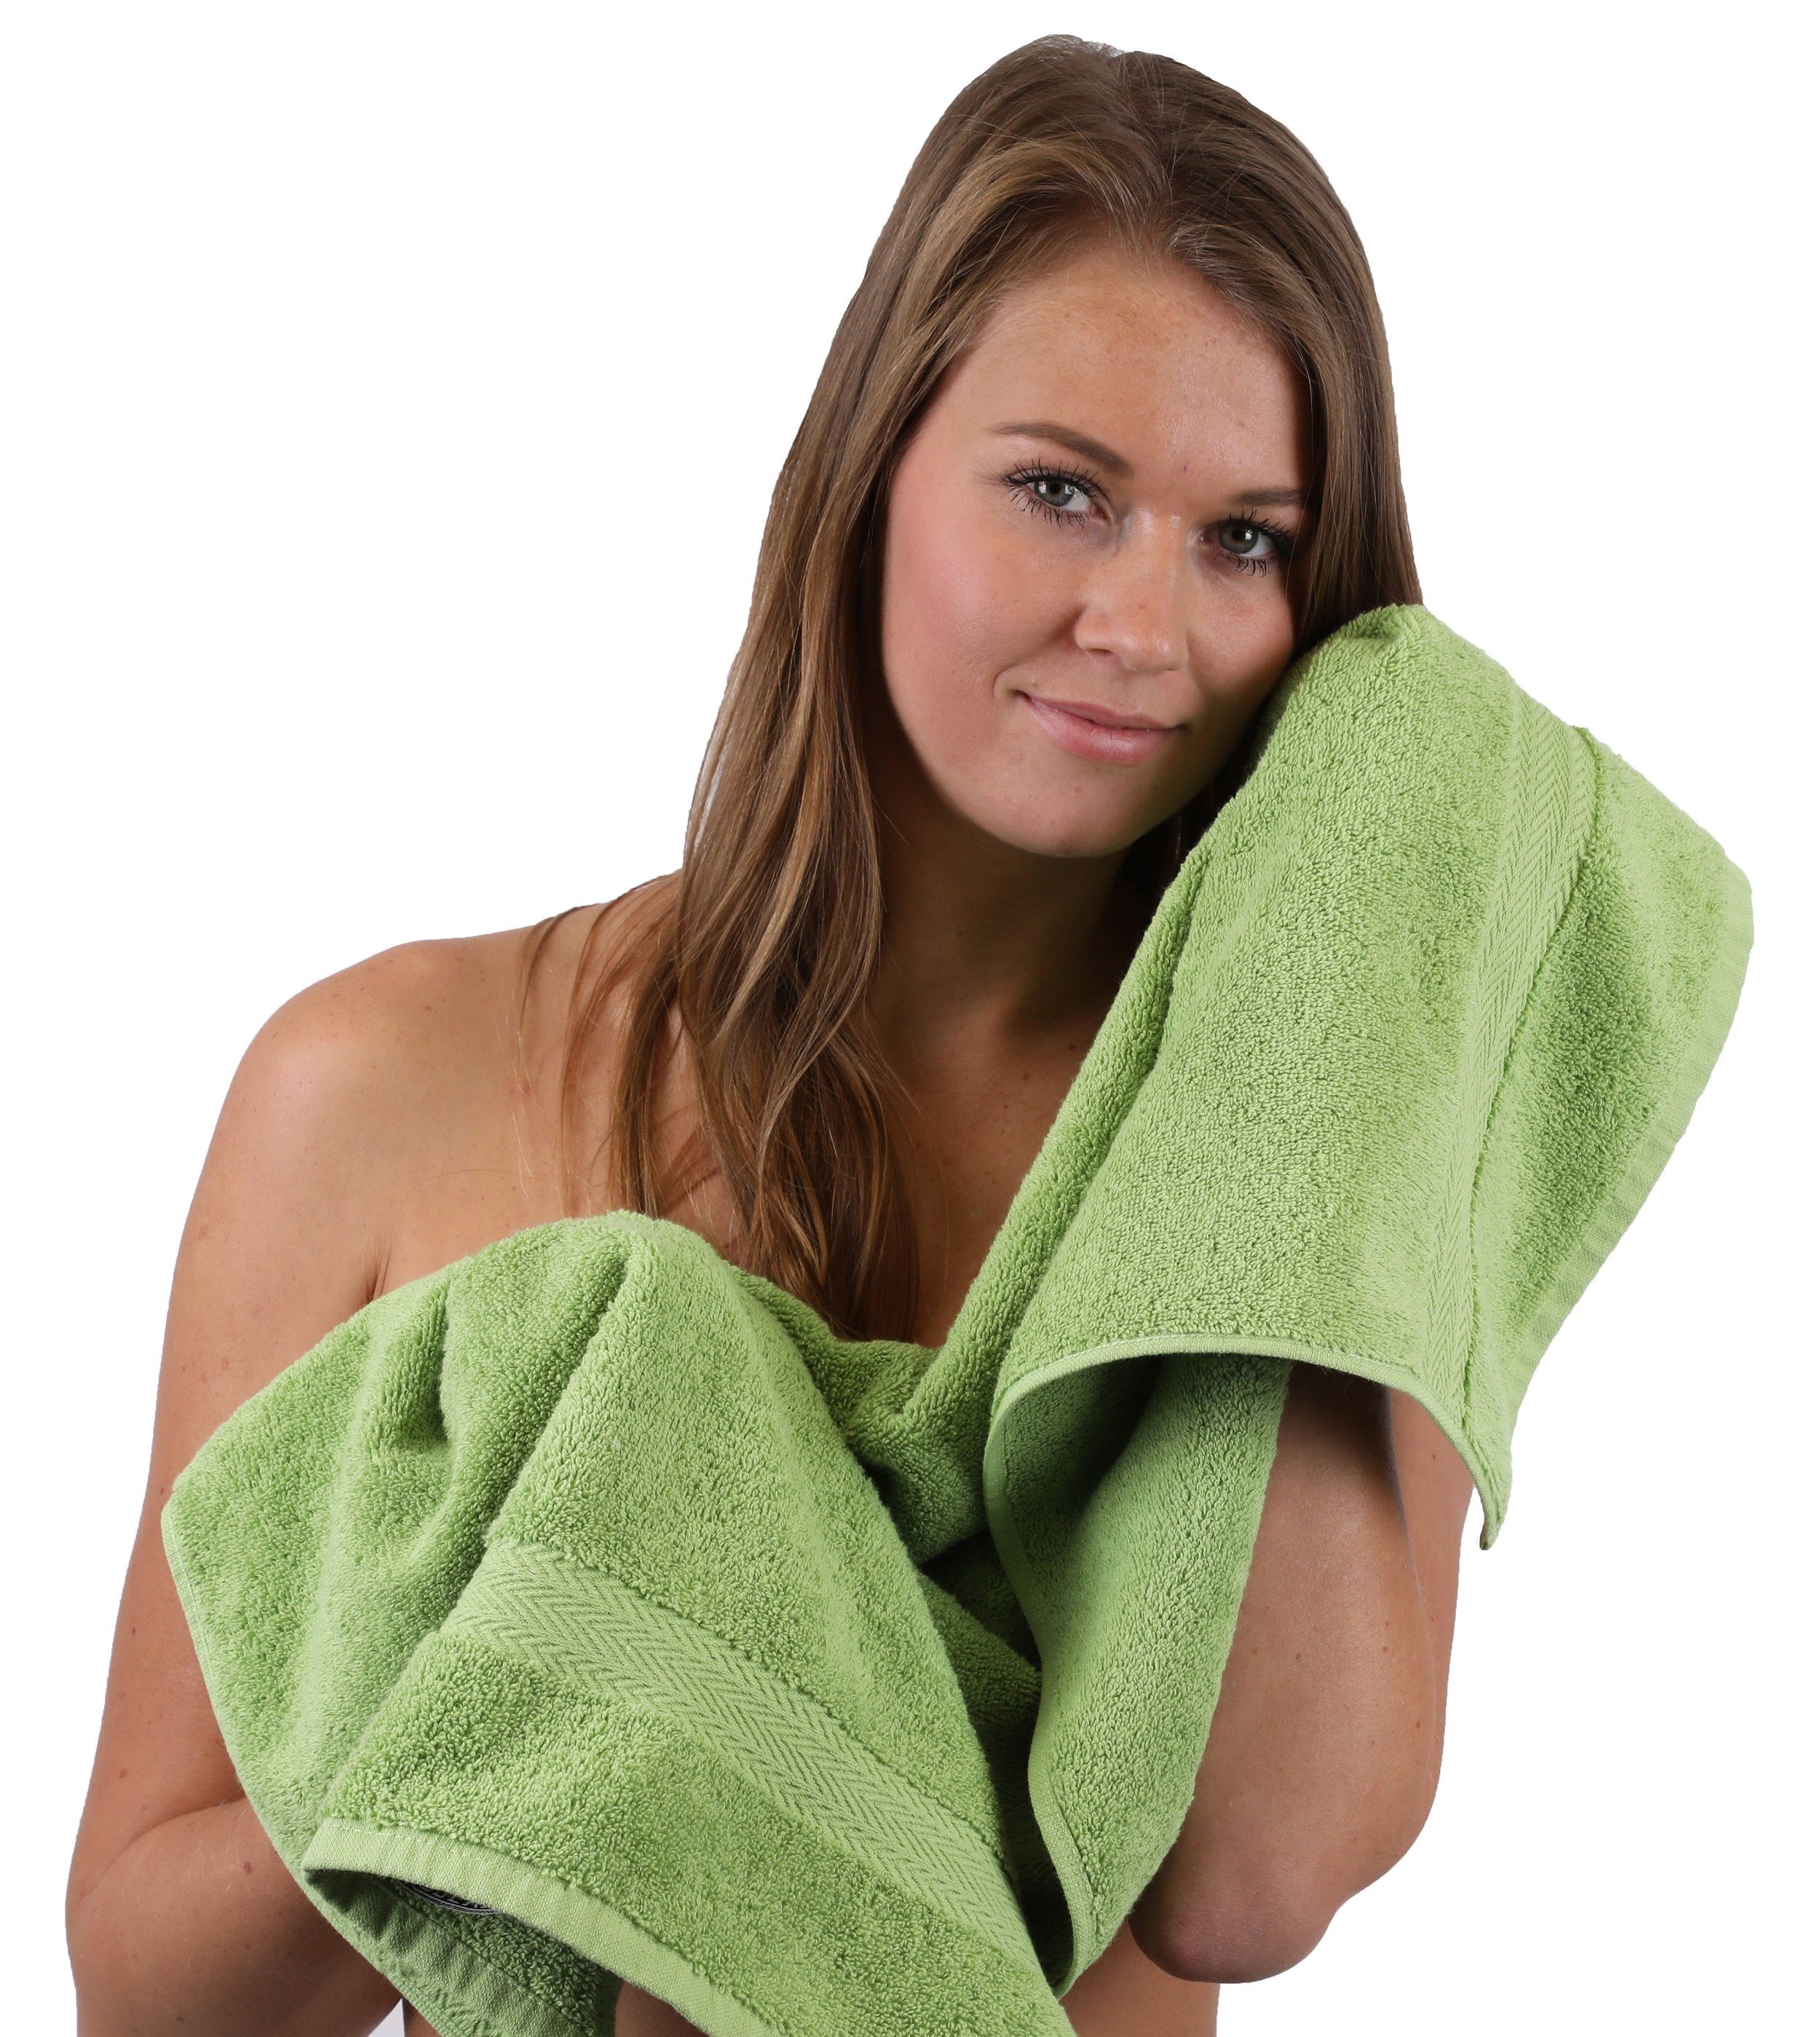 Handtücher 4 Handtücher Farbe Stück Betz apfelgrün, Baumwolle Handtücher weiß und Premium 100% 4